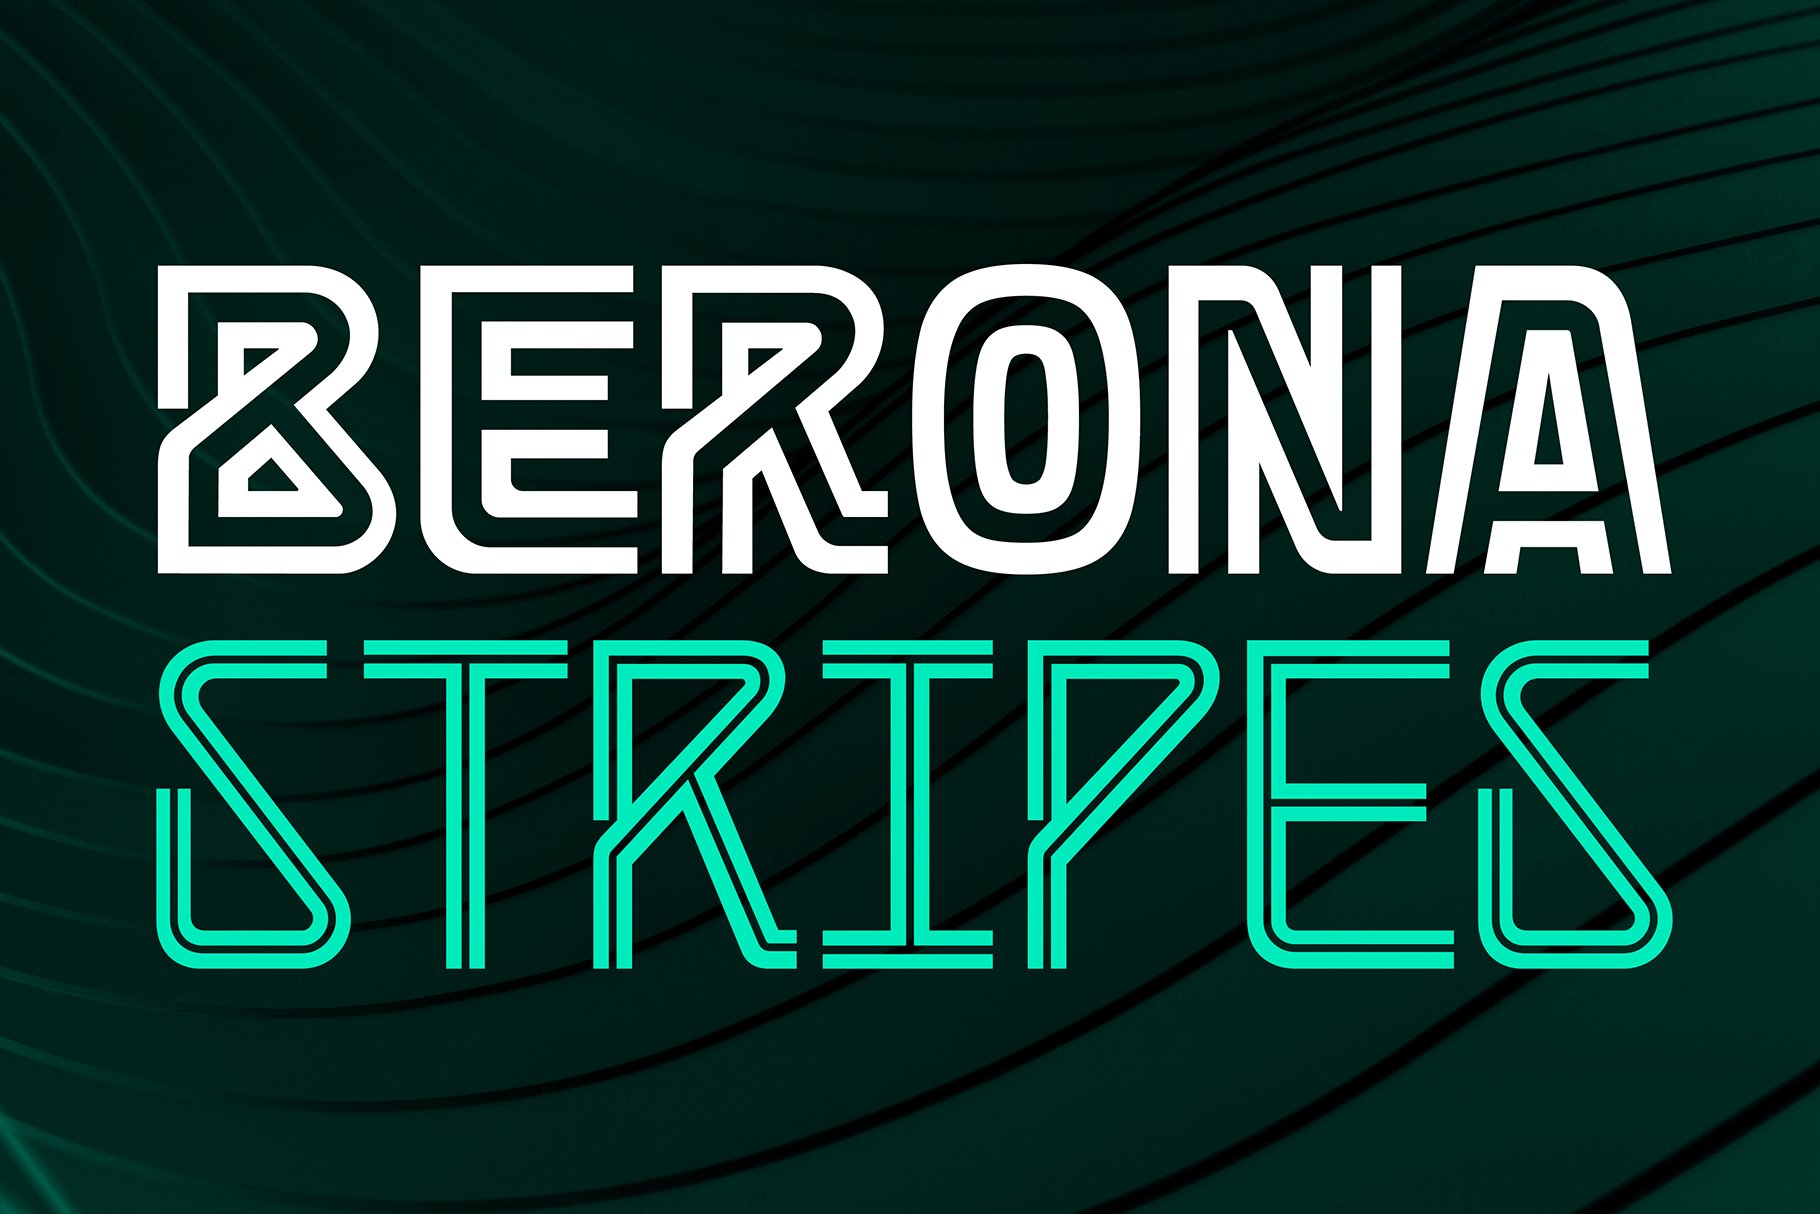 Berona Stripes cover image.